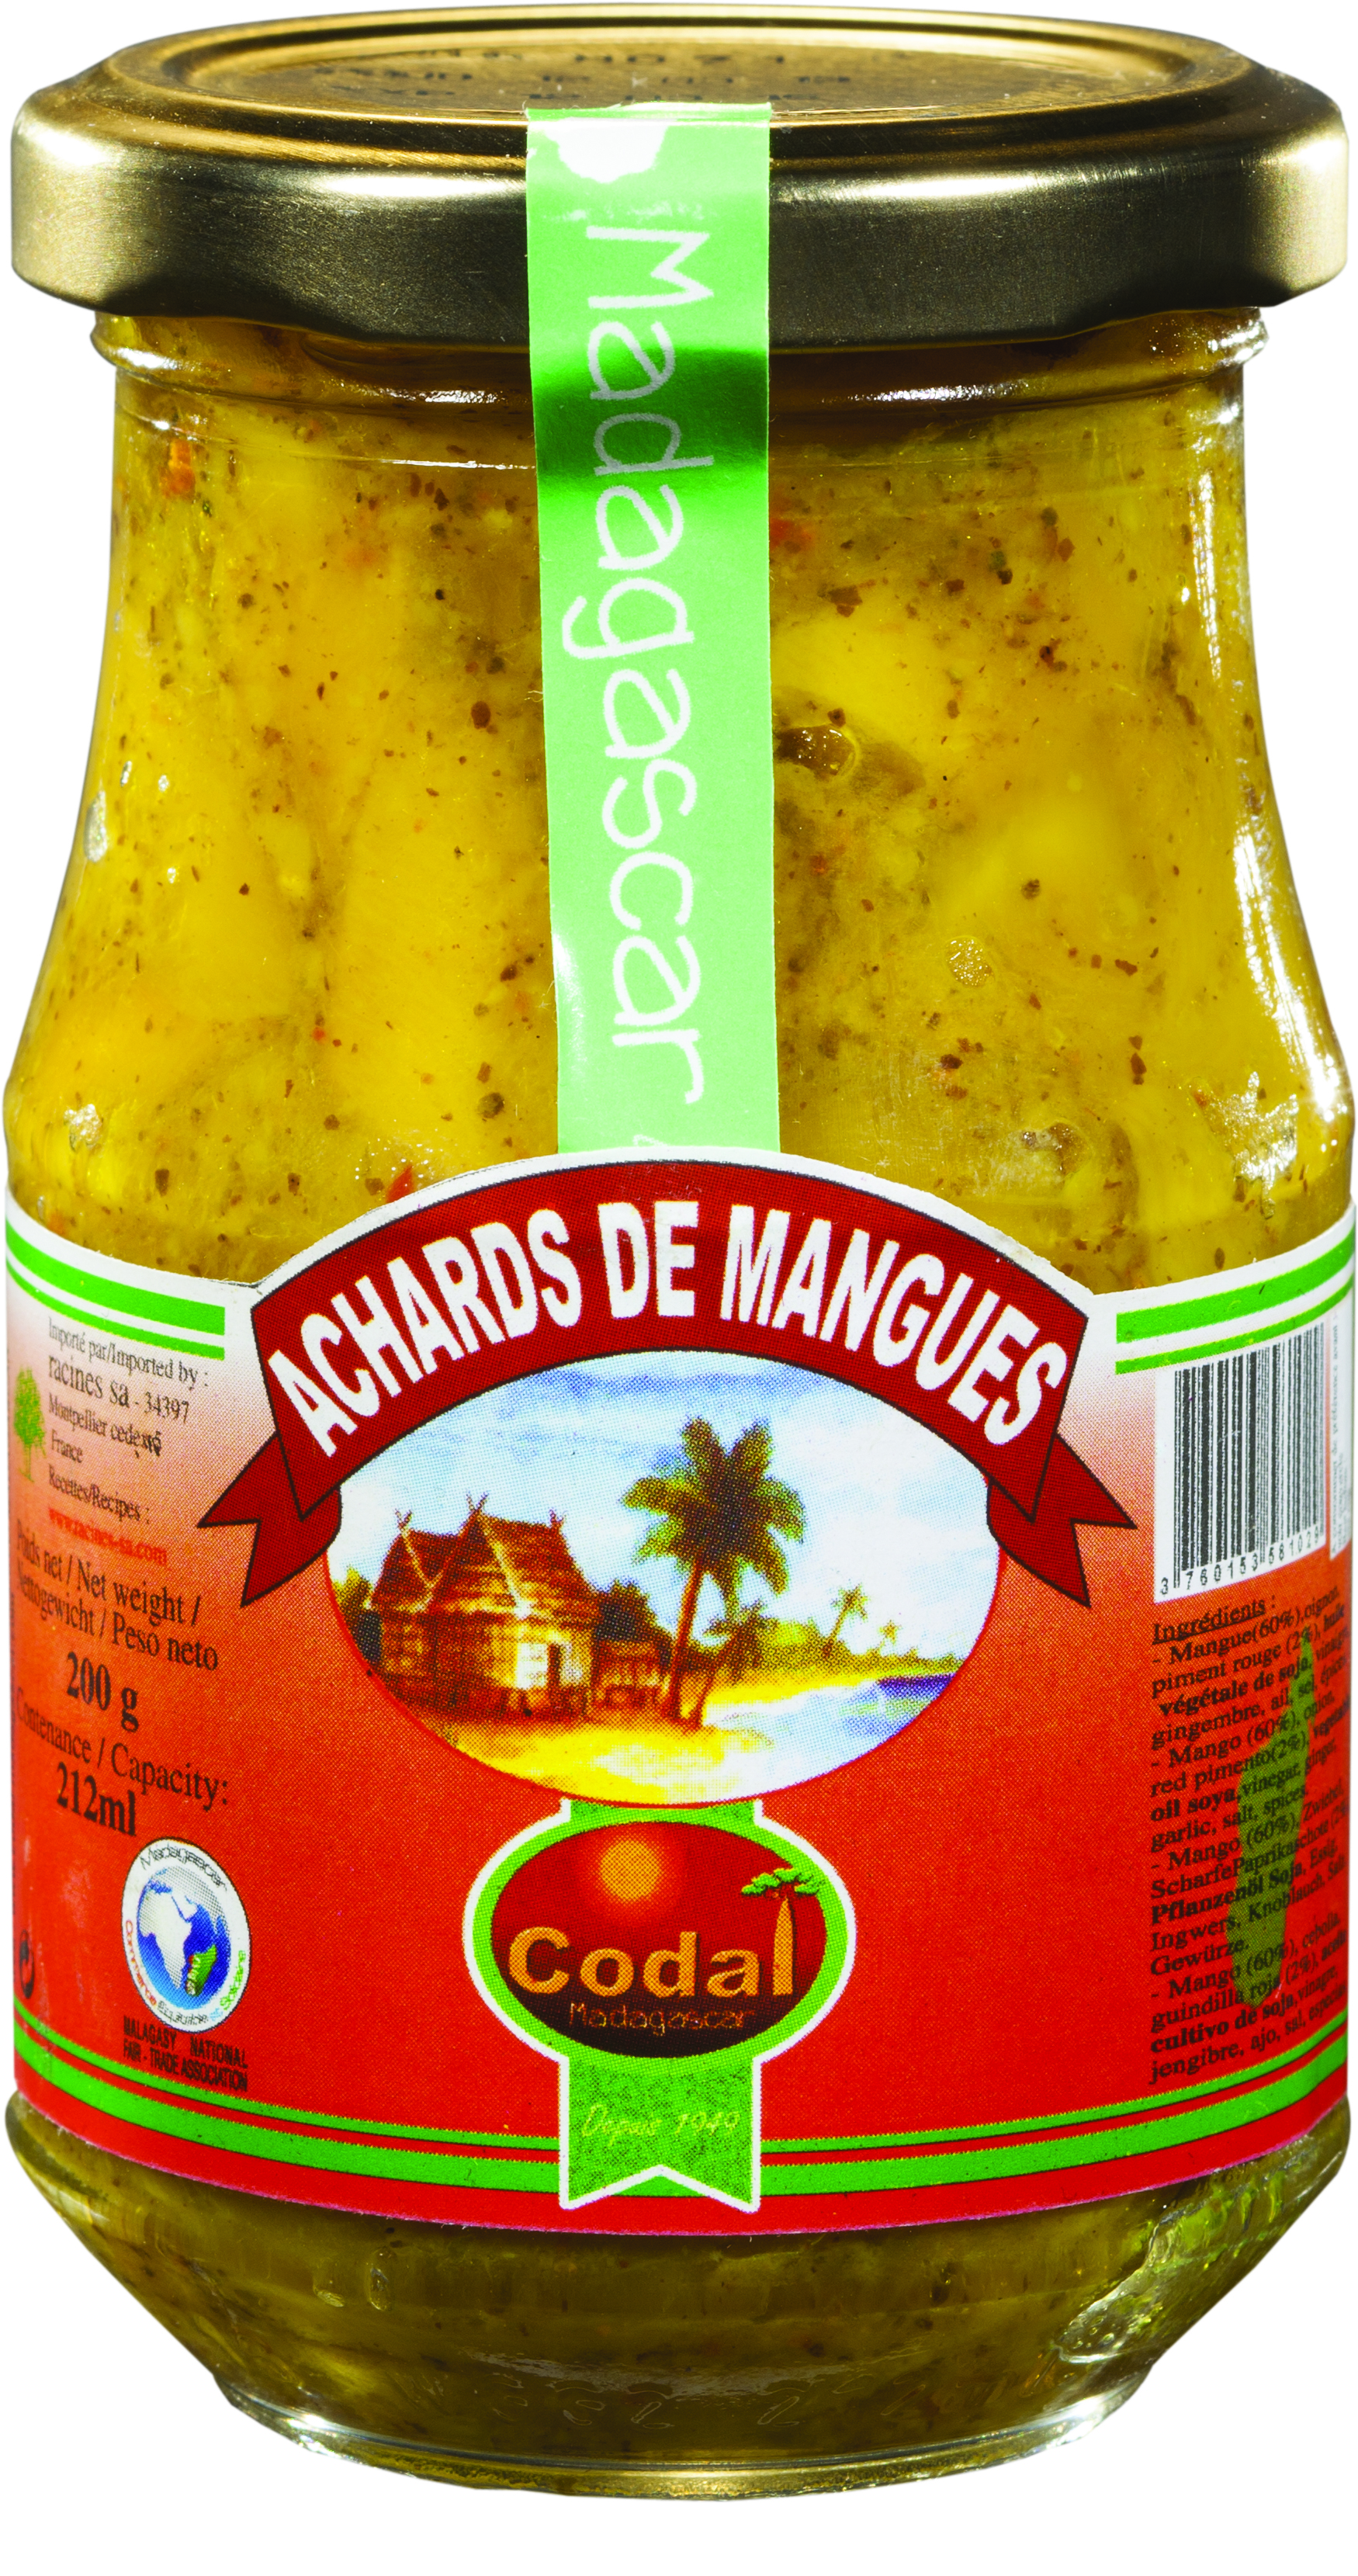 Sottaceti al mango (12 X 200 G) - Codal